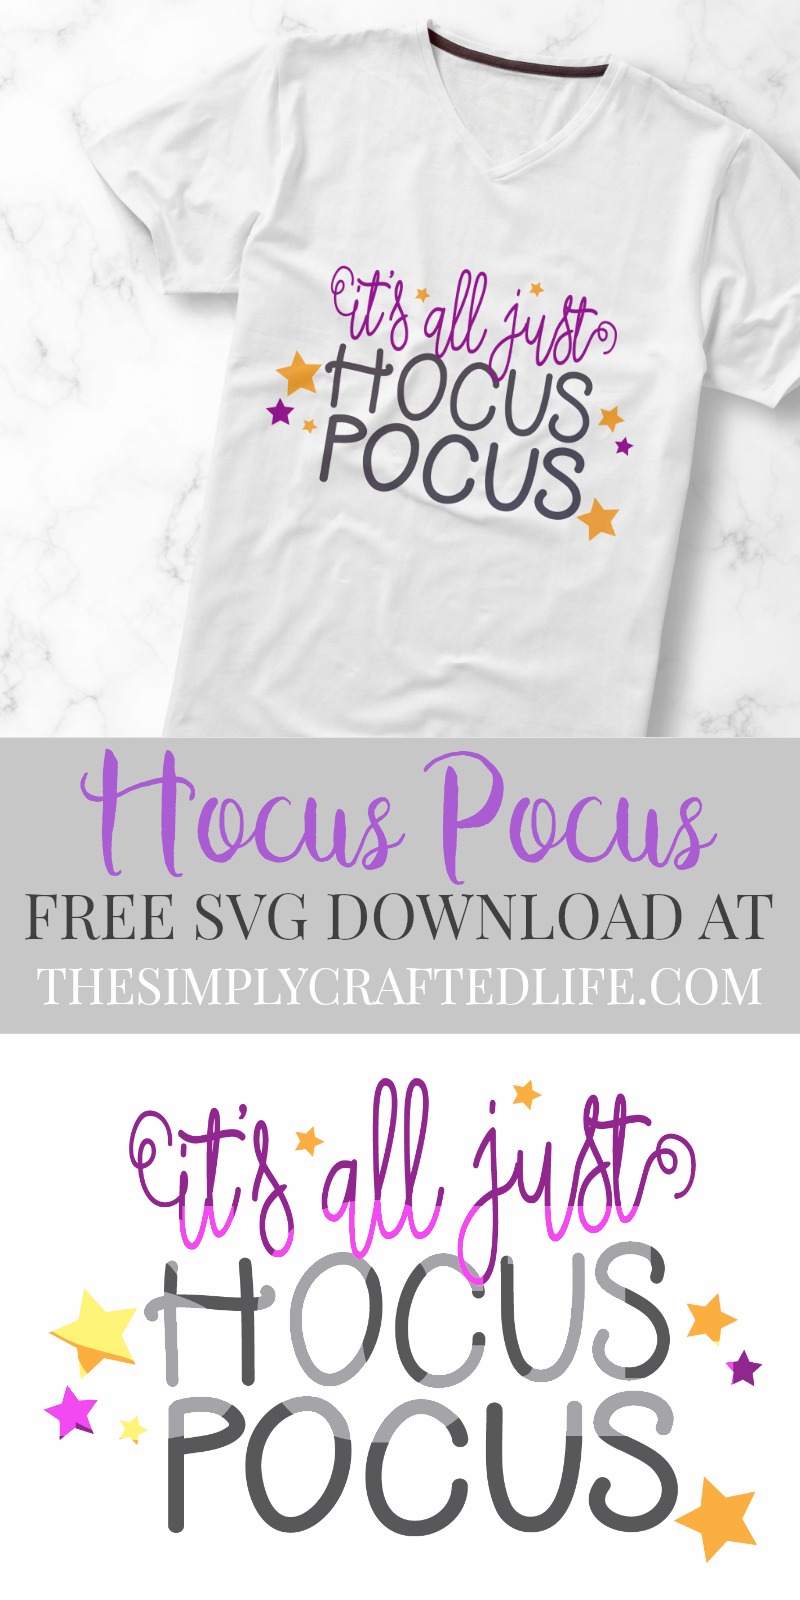 Download Free Hocus Pocus SVG Cut File for Cricut or Silhouette